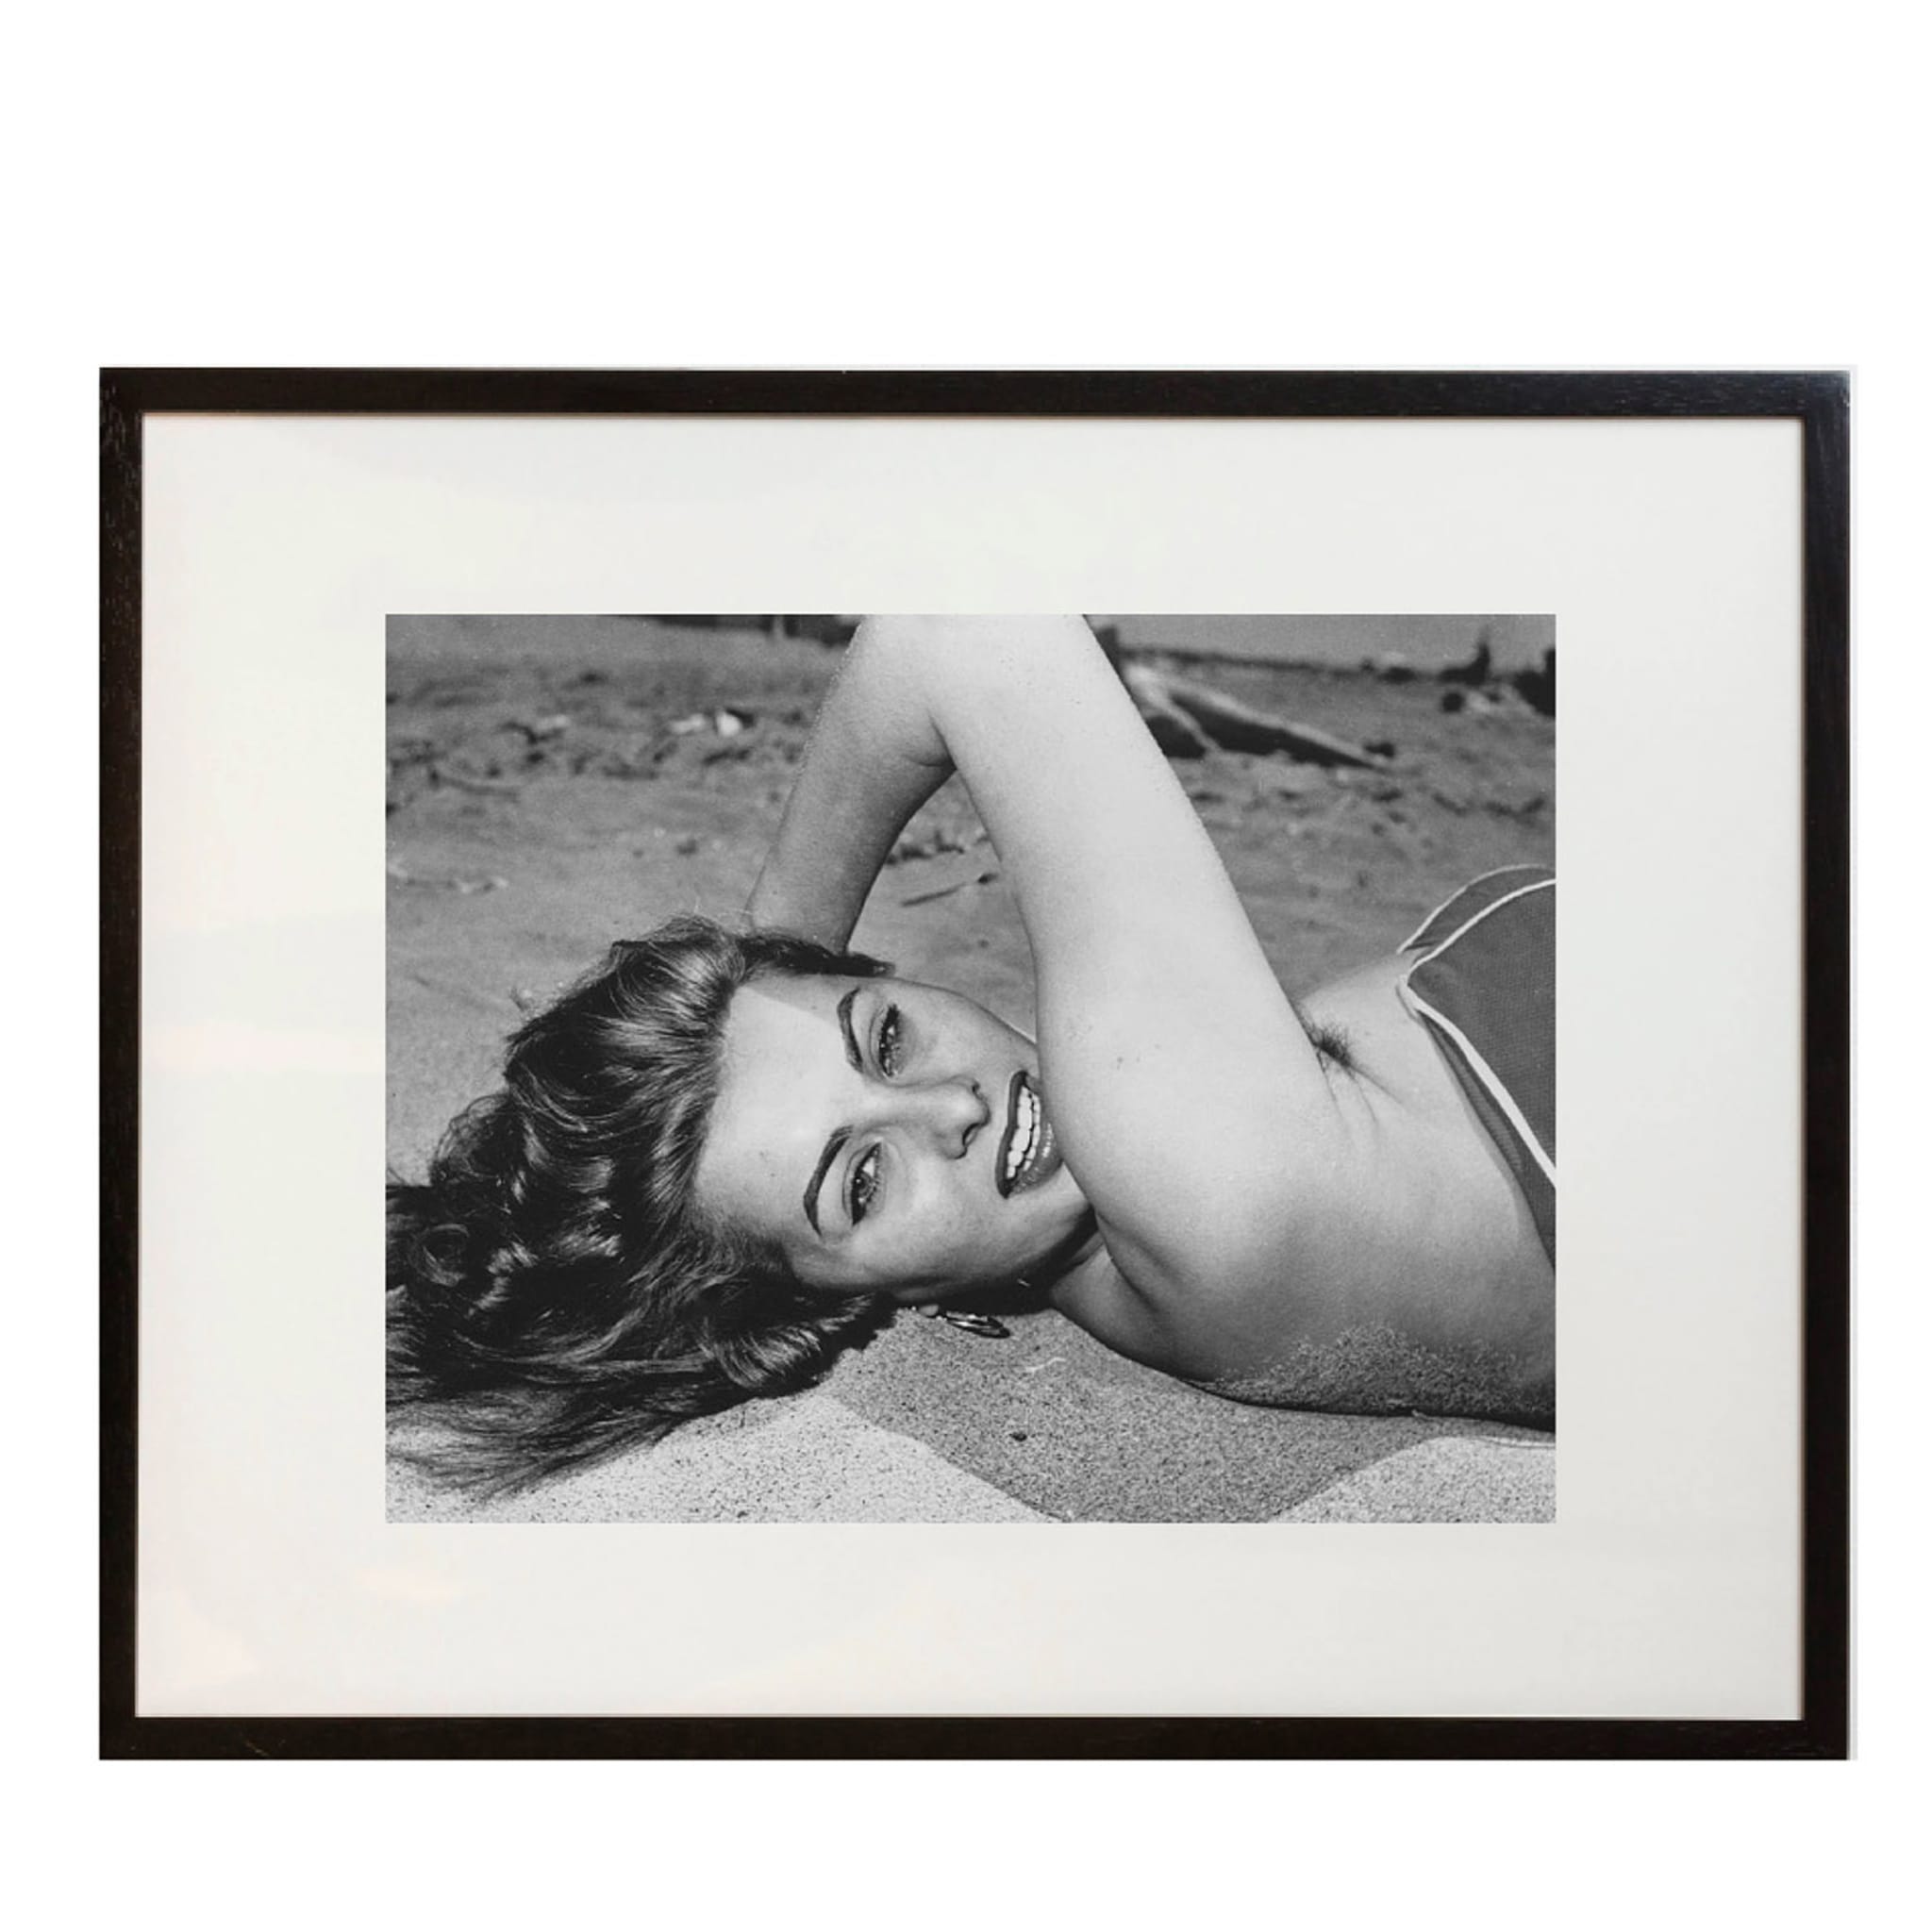 Sophia Loren #4 Framed Print by Keystone - Main view